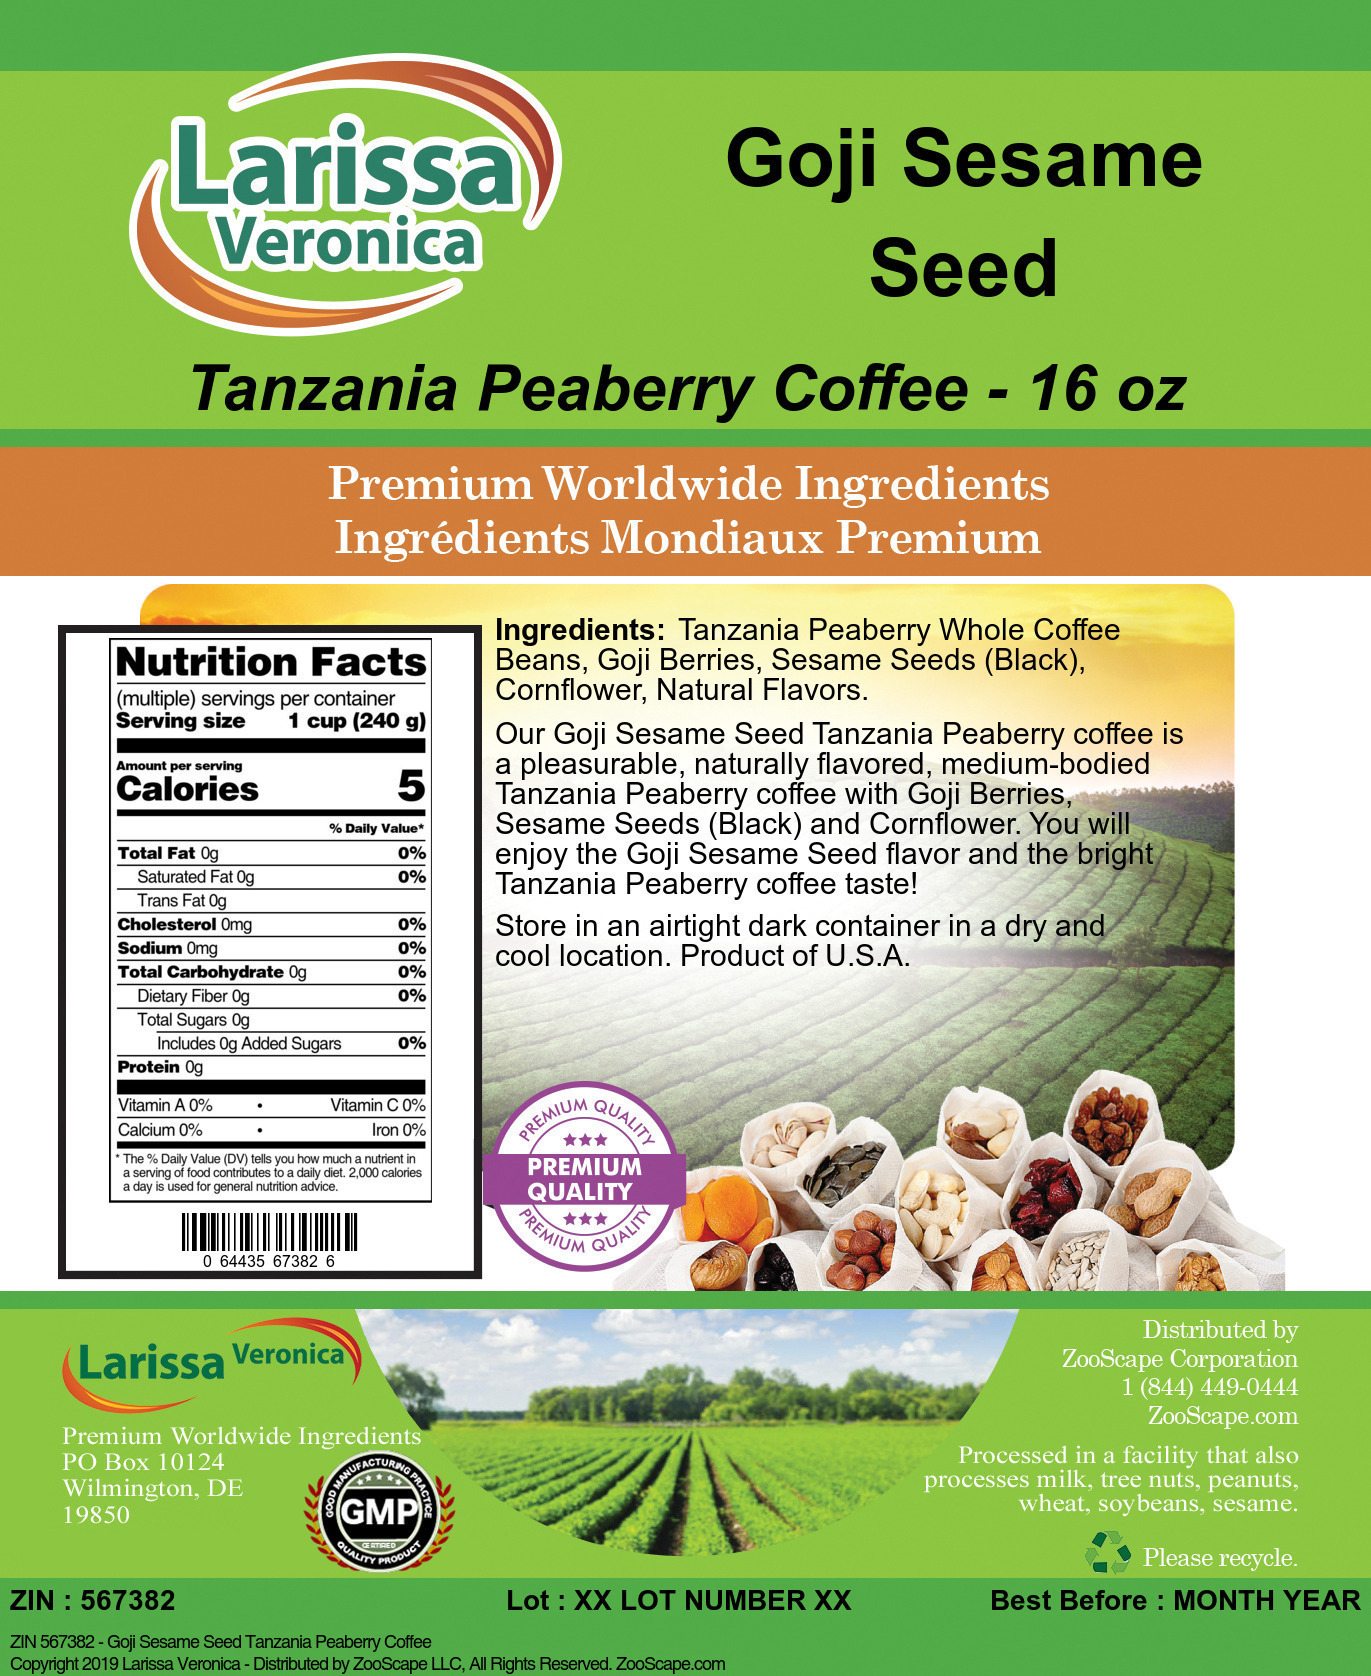 Goji Sesame Seed Tanzania Peaberry Coffee - Label